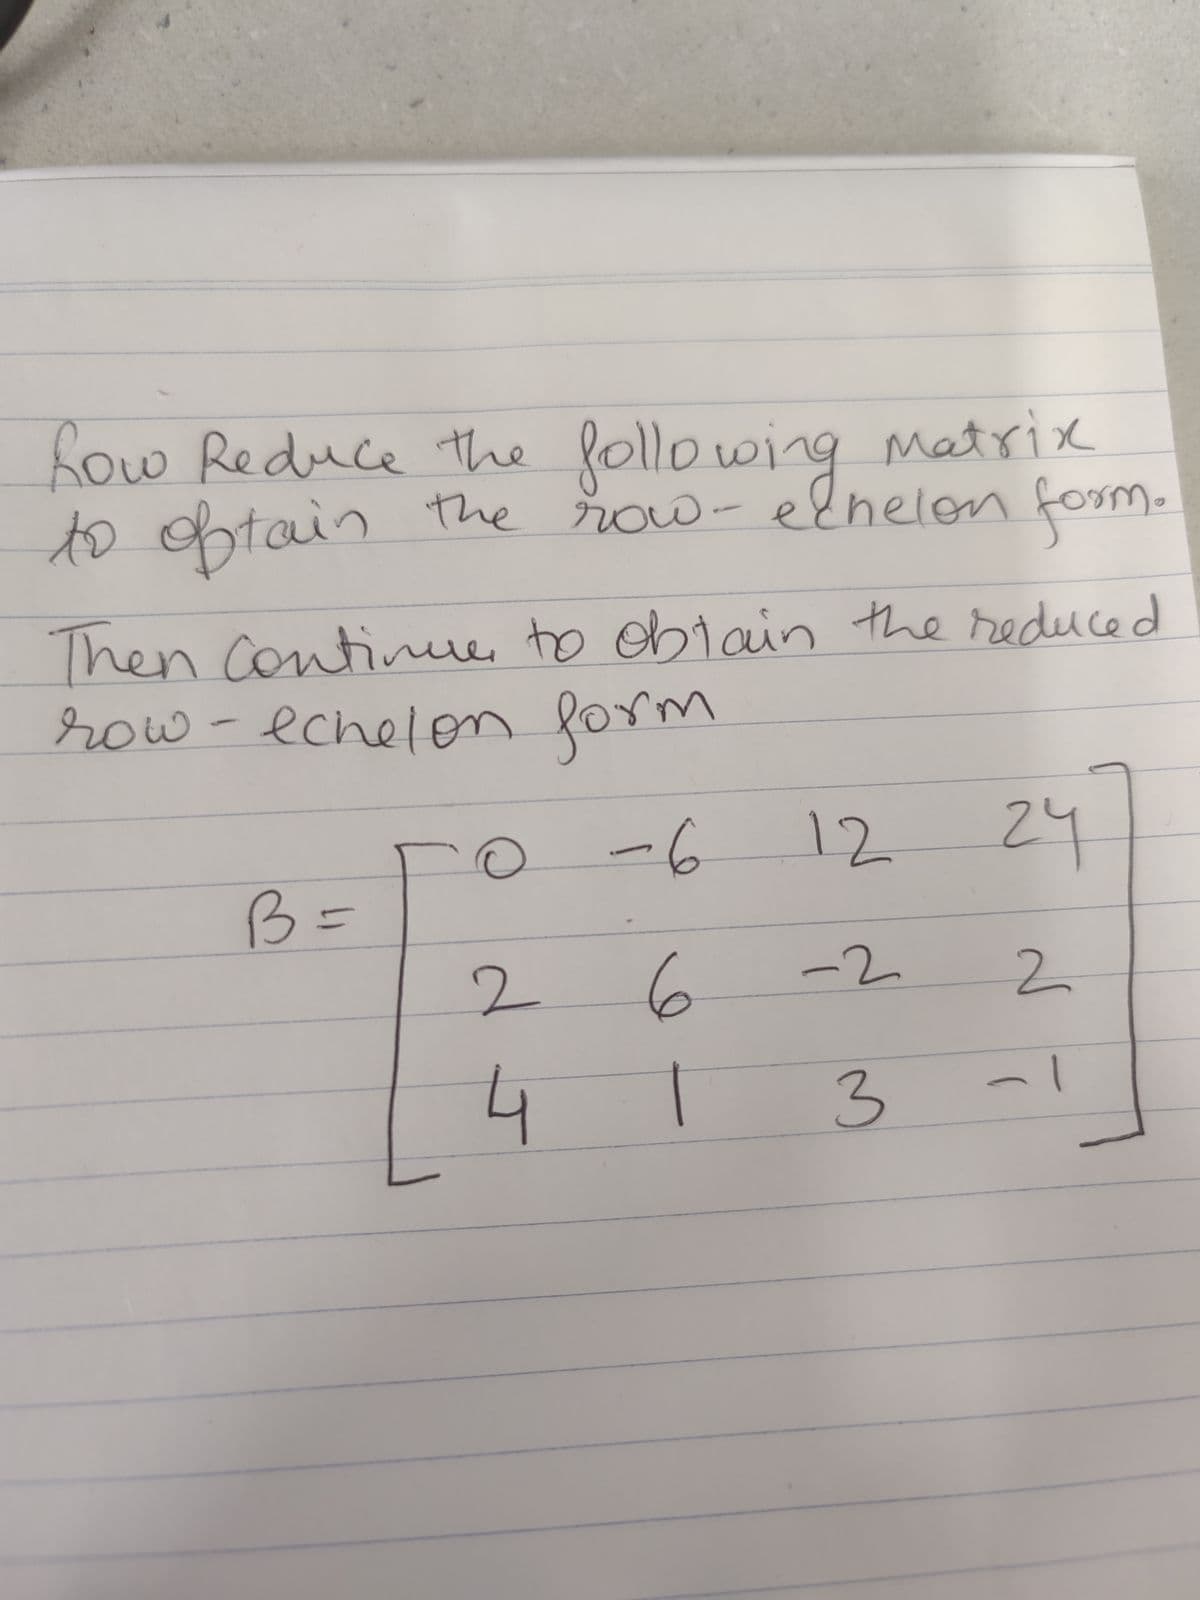 how Reduce the following matrix
to obtain the row - elhelon form.
Then continue to obtain the reduced
row - echelon form
-6
B =
d J
6
1
12
-2
3
24
2
1
-